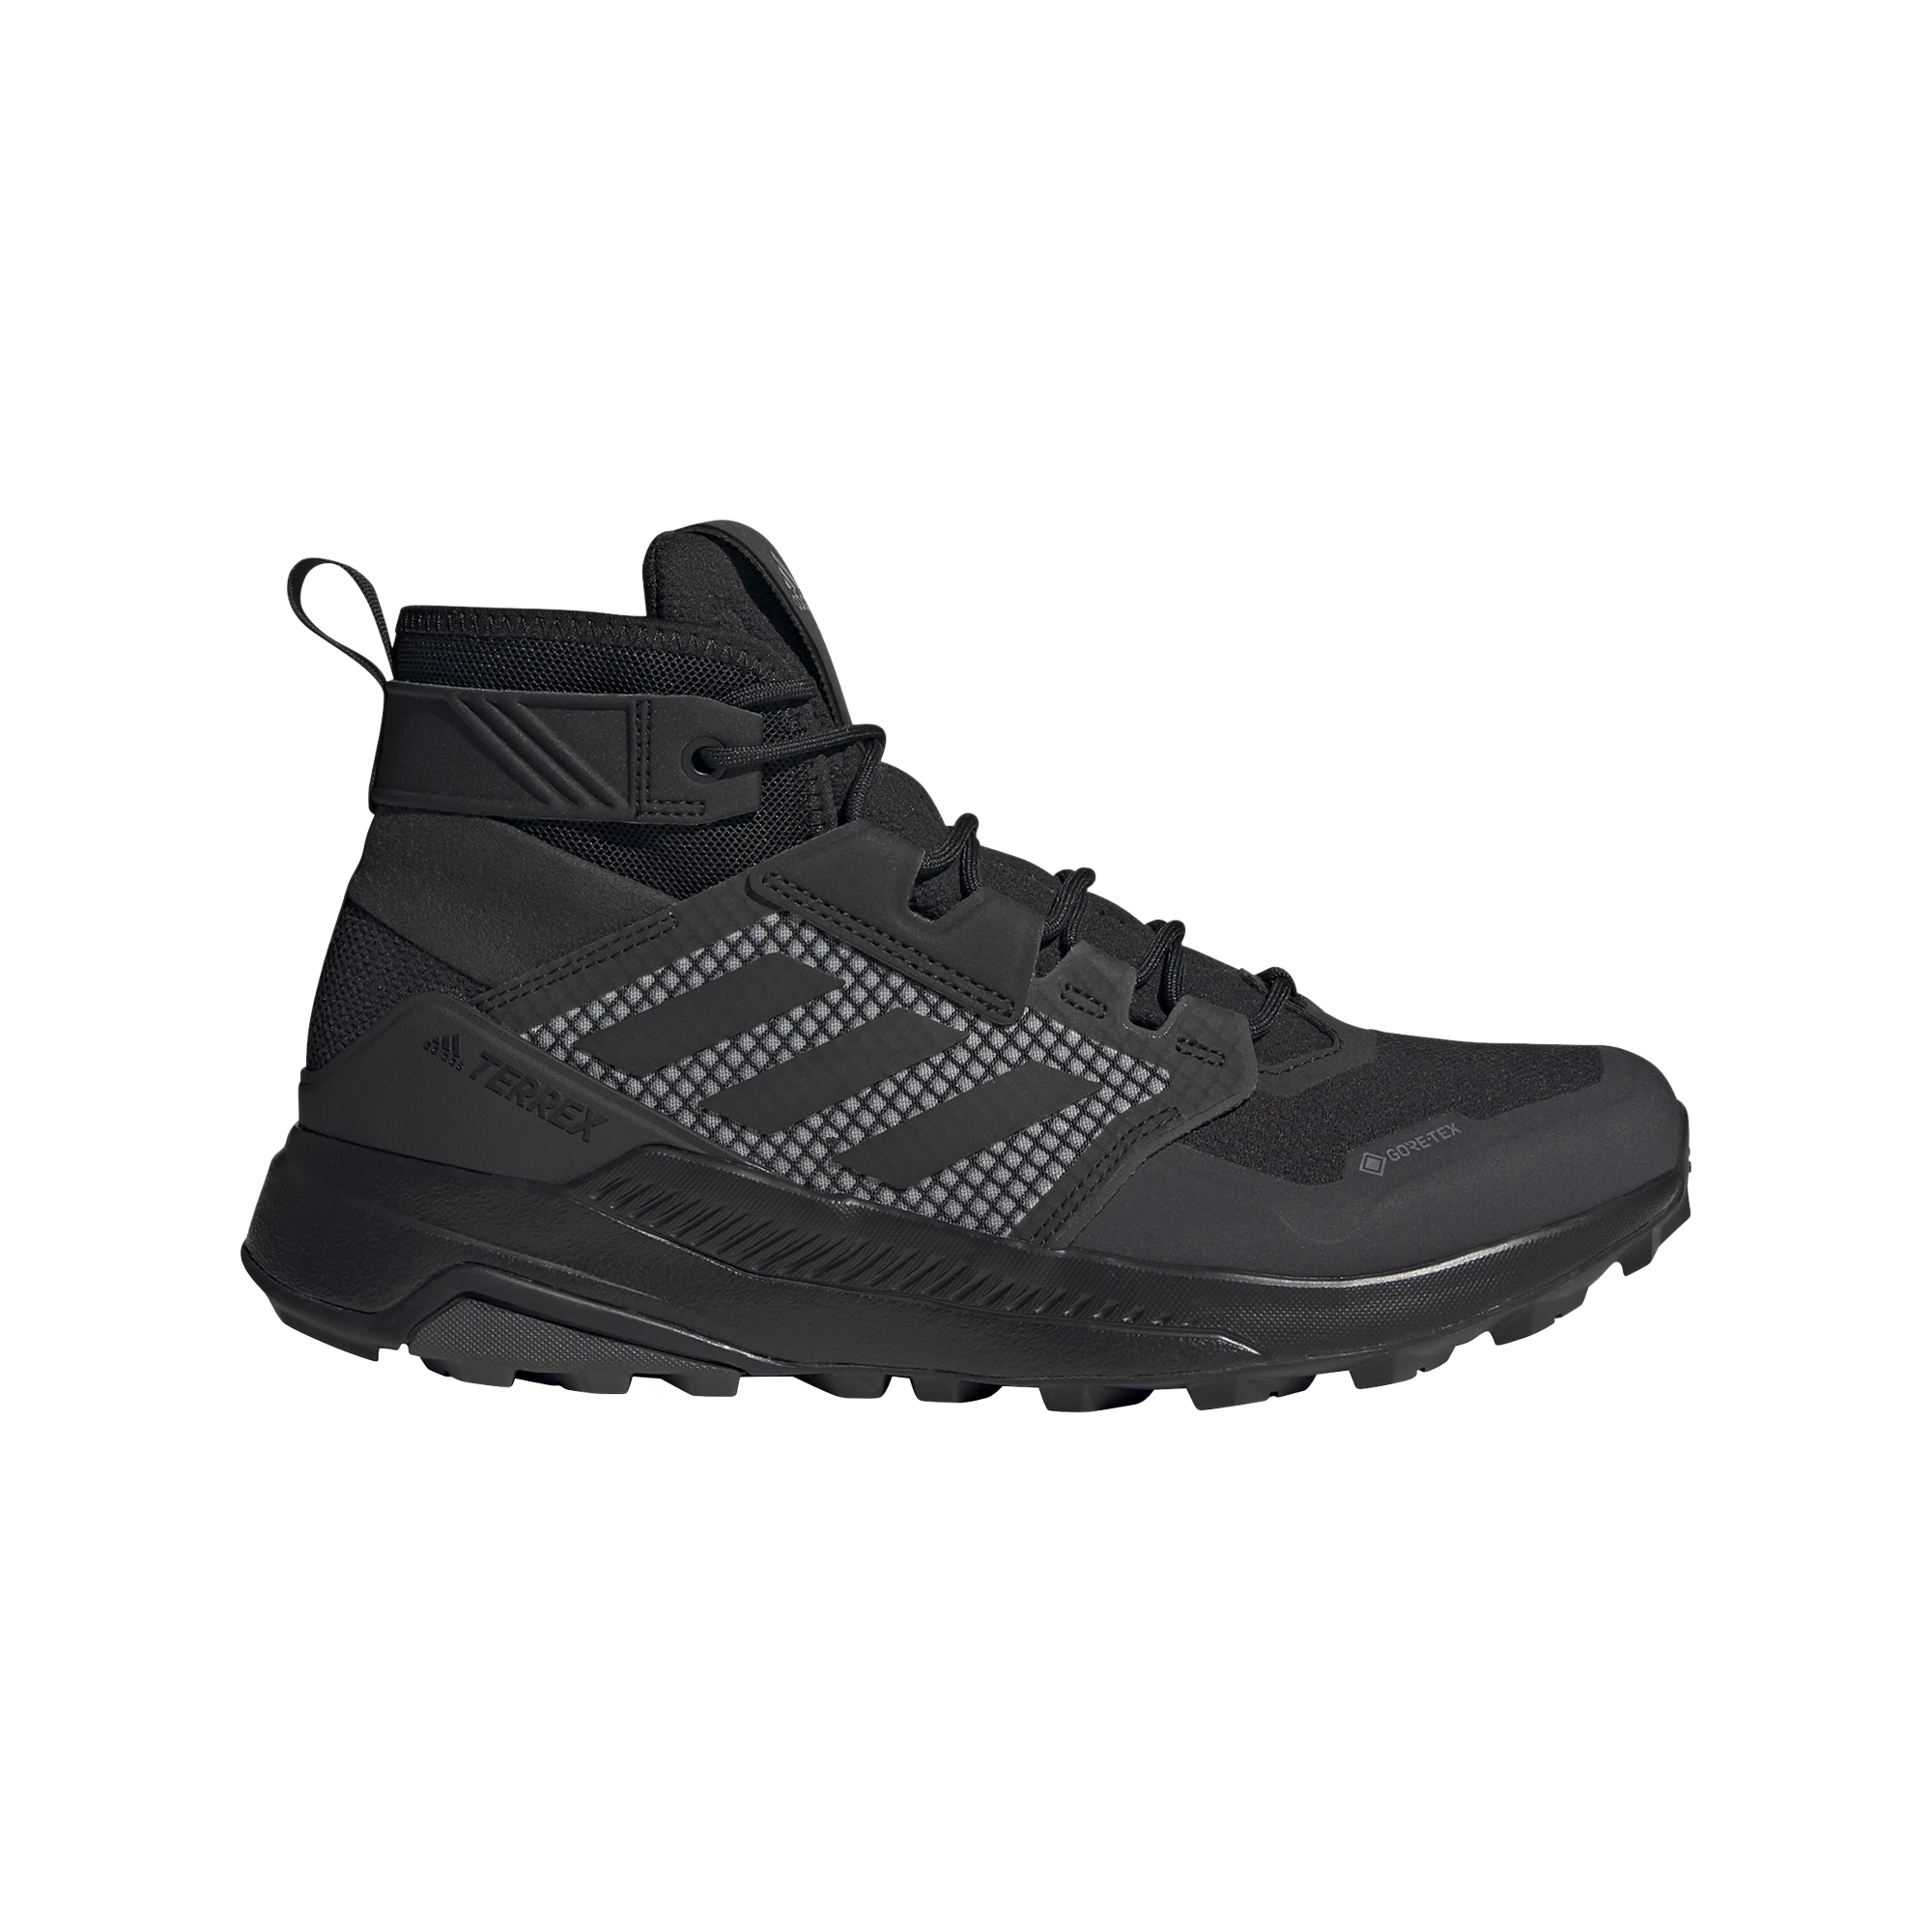 Adidas Men's Terrex Trailmaker Mid Gore-Tex Hiking Shoes Core Black/Core Black/Dgh Solid Grey 41 1/3, Core Black/Core Black/Dgh Solid Grey